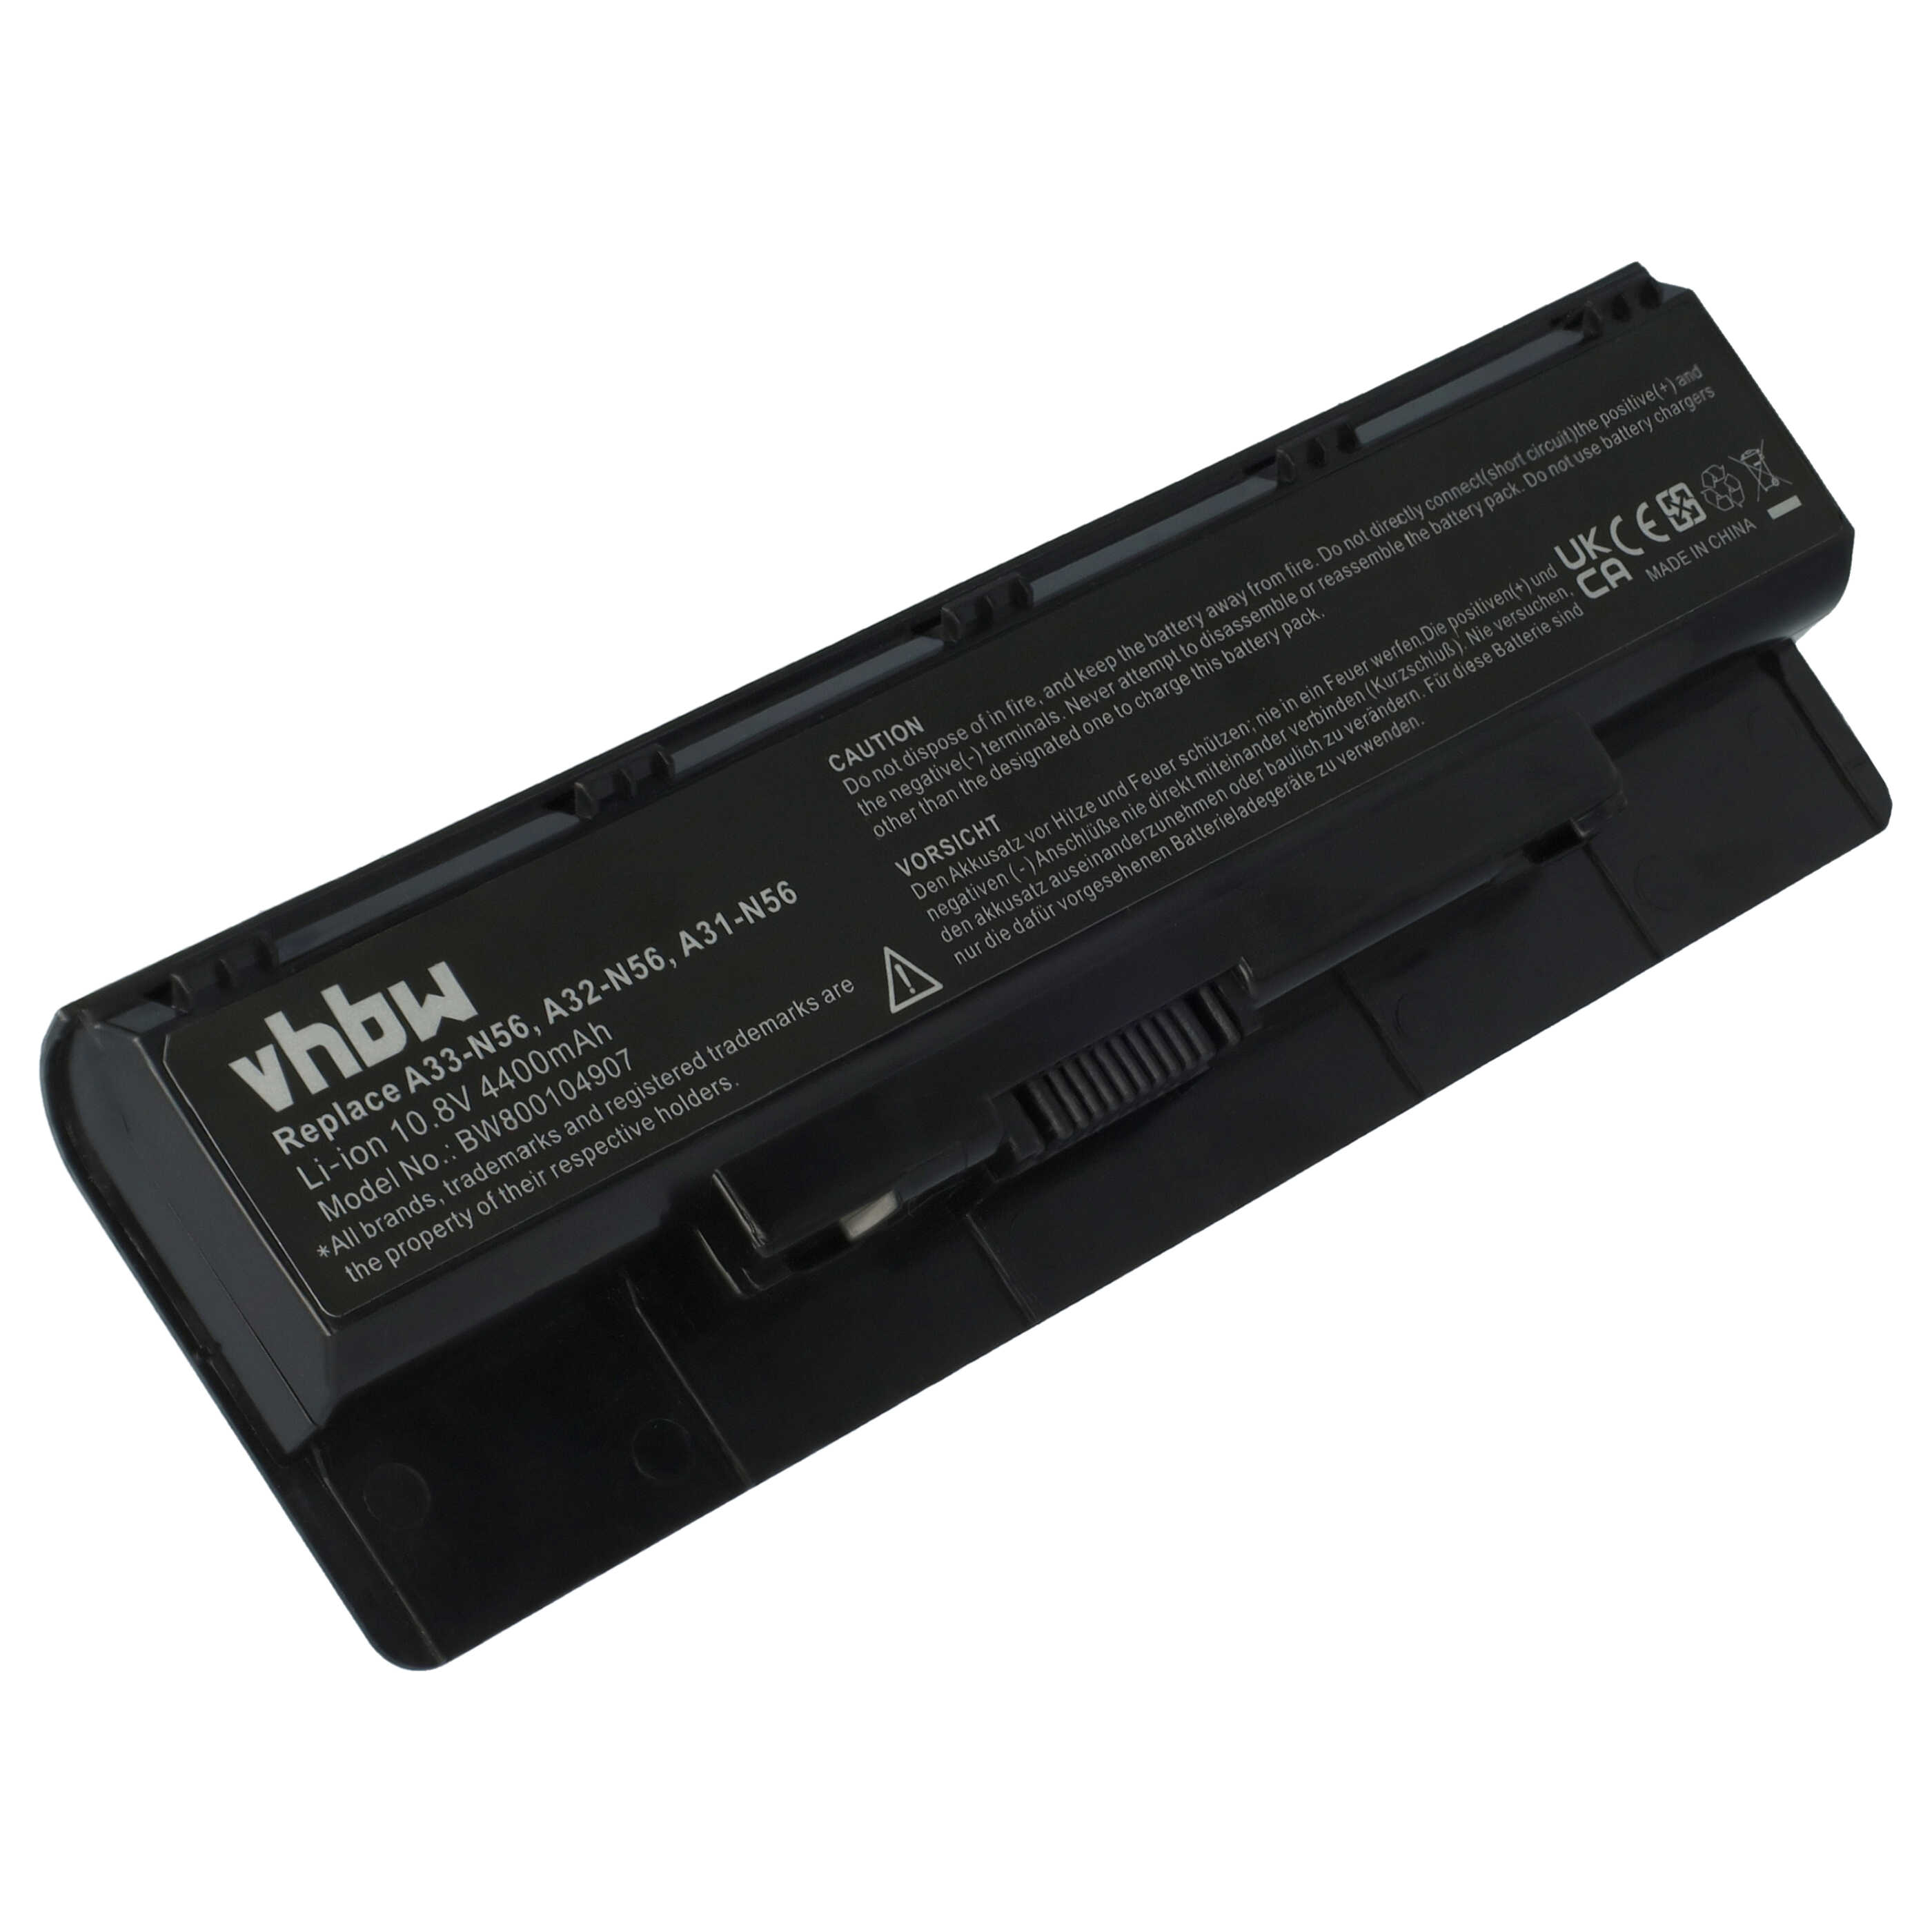 Batteria sostituisce Asus A32-N56, A31-N56, A33-N56 per notebook Asus - 4400mAh 10,8V Li-Ion nero